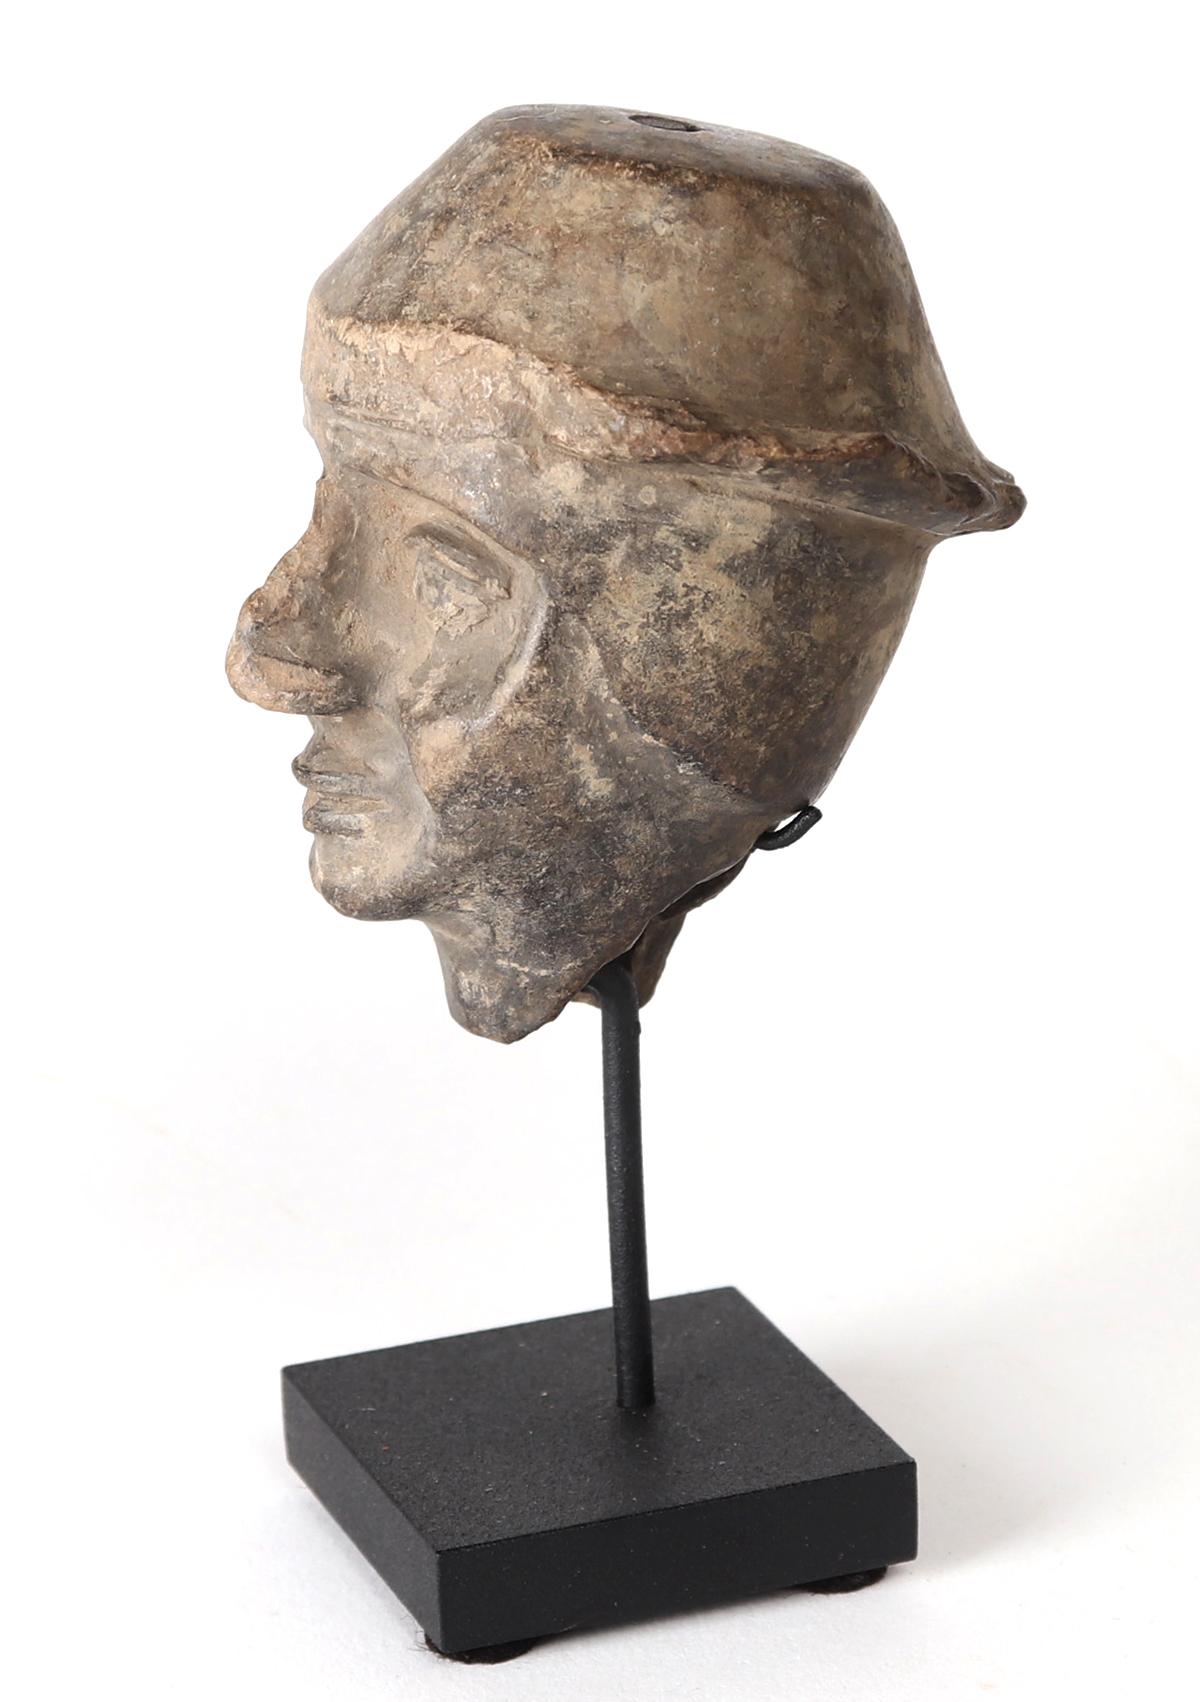 Rare Aztec Colonial Head w/Brimmed Hat, 1200-1500CE